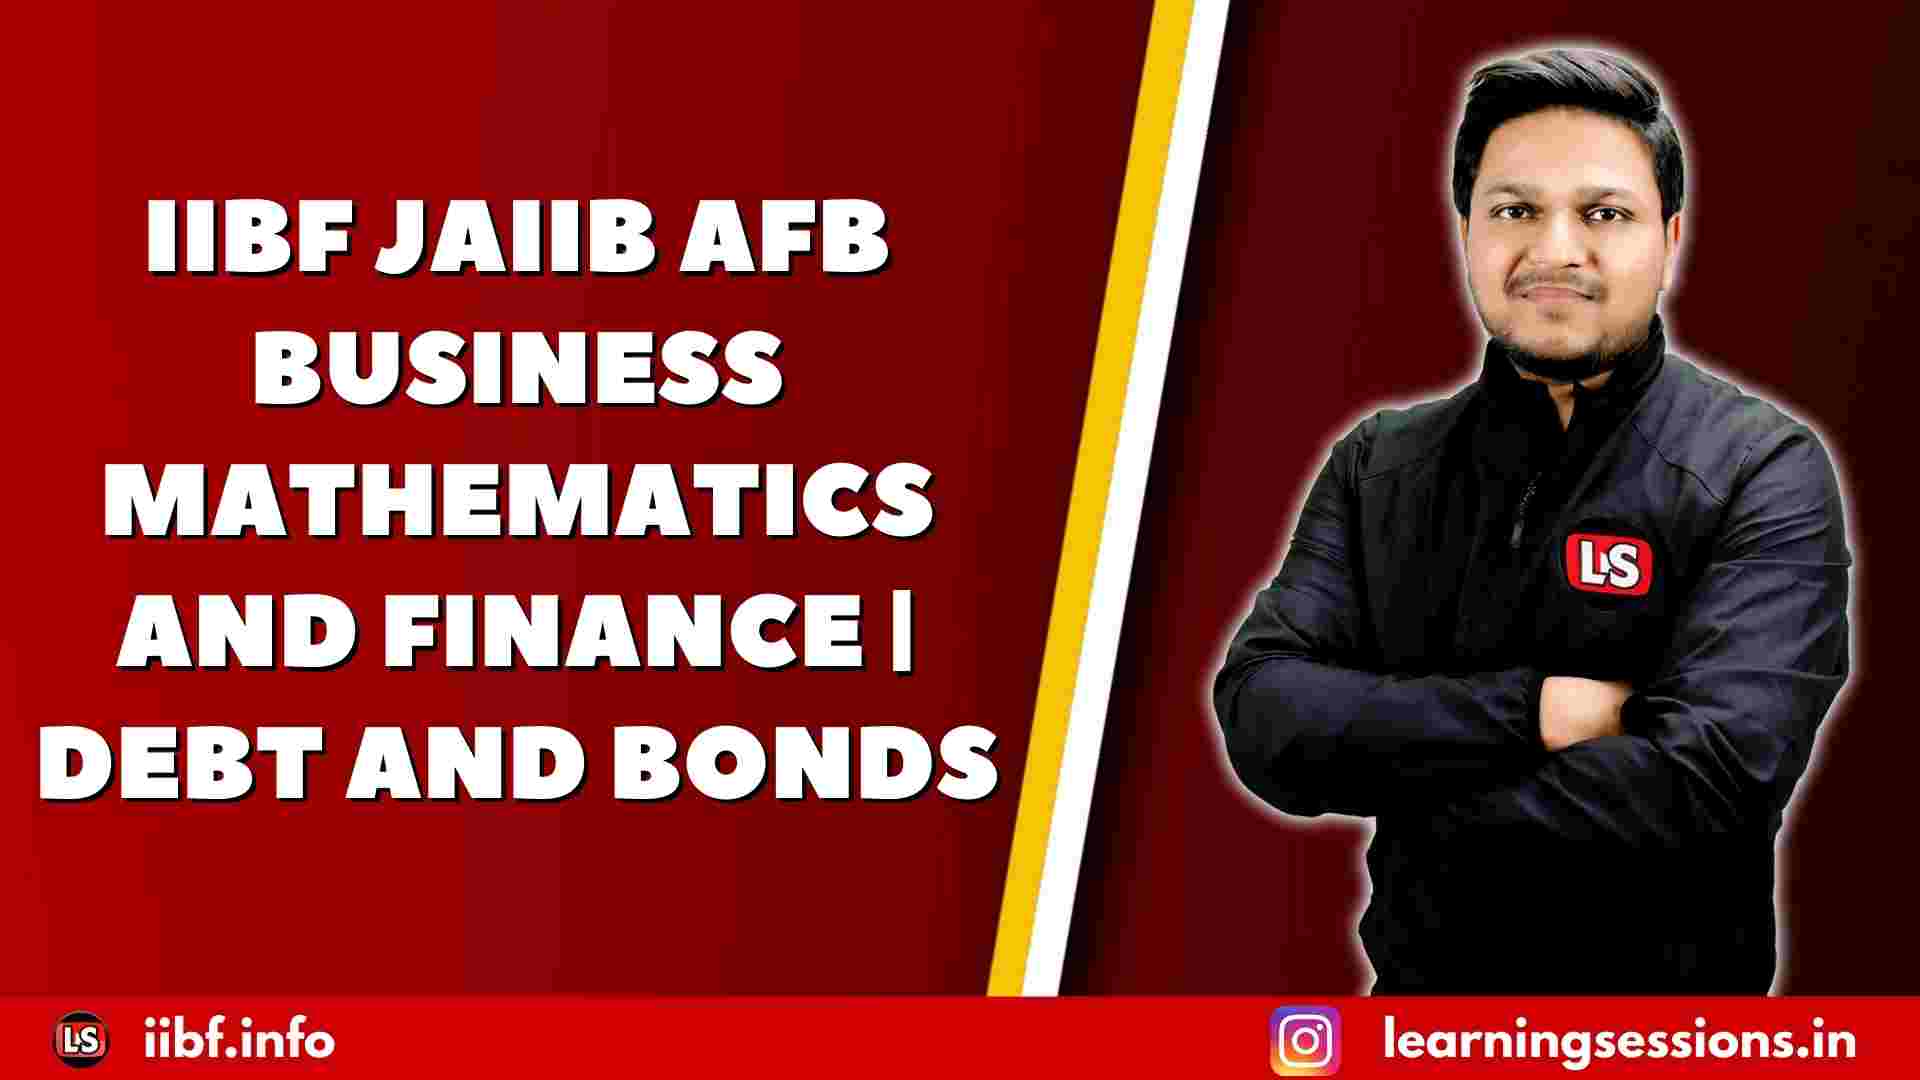 IIBF JAIIB AFB BUSINESS MATHEMATICS AND FINANCE | DEBT AND BONDS